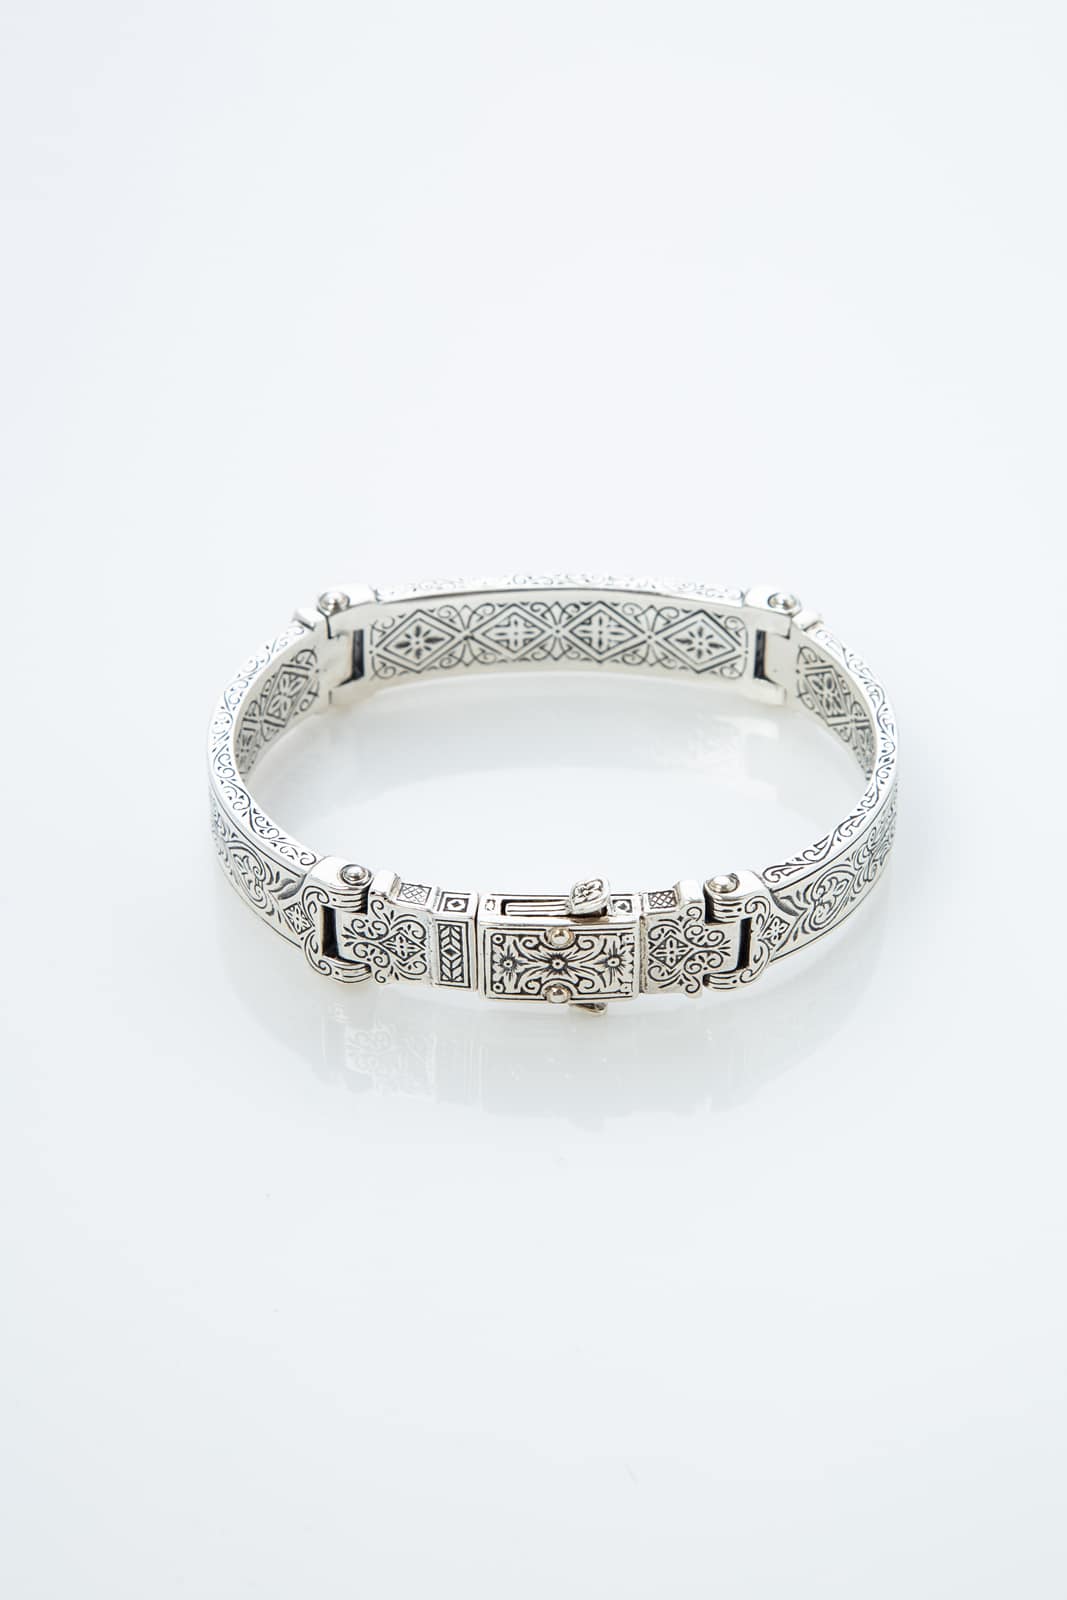 Bracelet from Sterling Silver 925